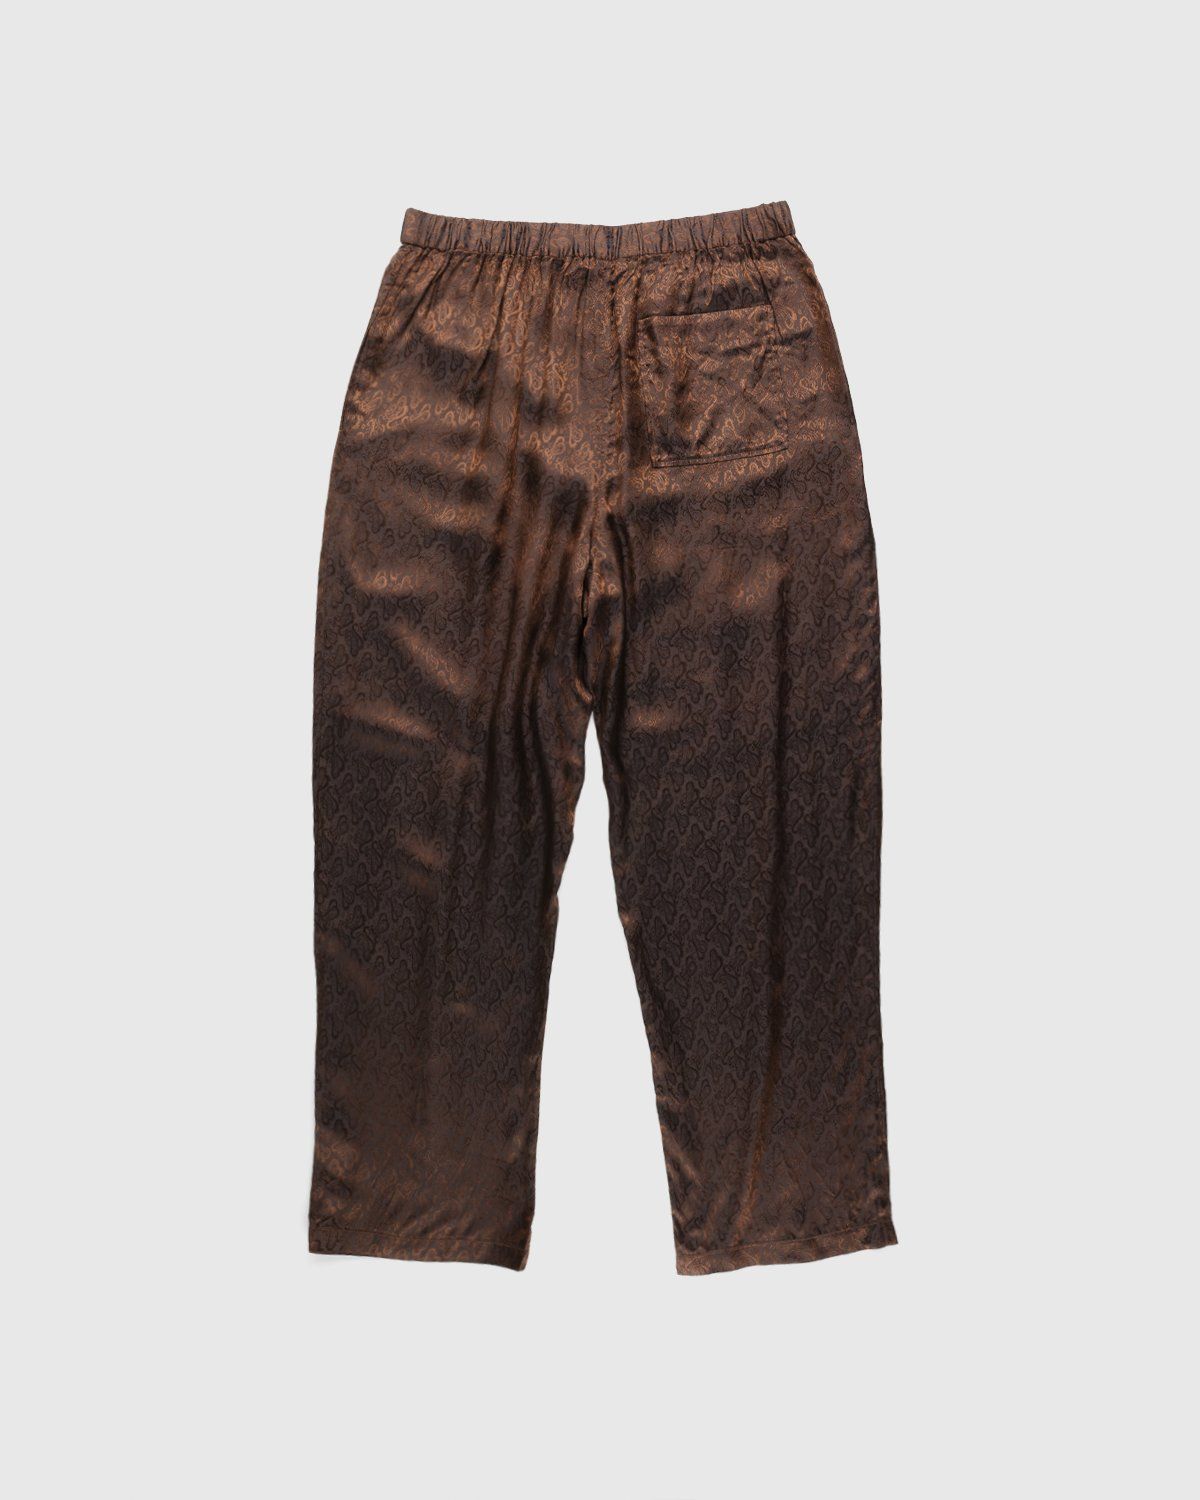 Acne Studios – Jacquard Trousers Brown - Pants - Brown - Image 2